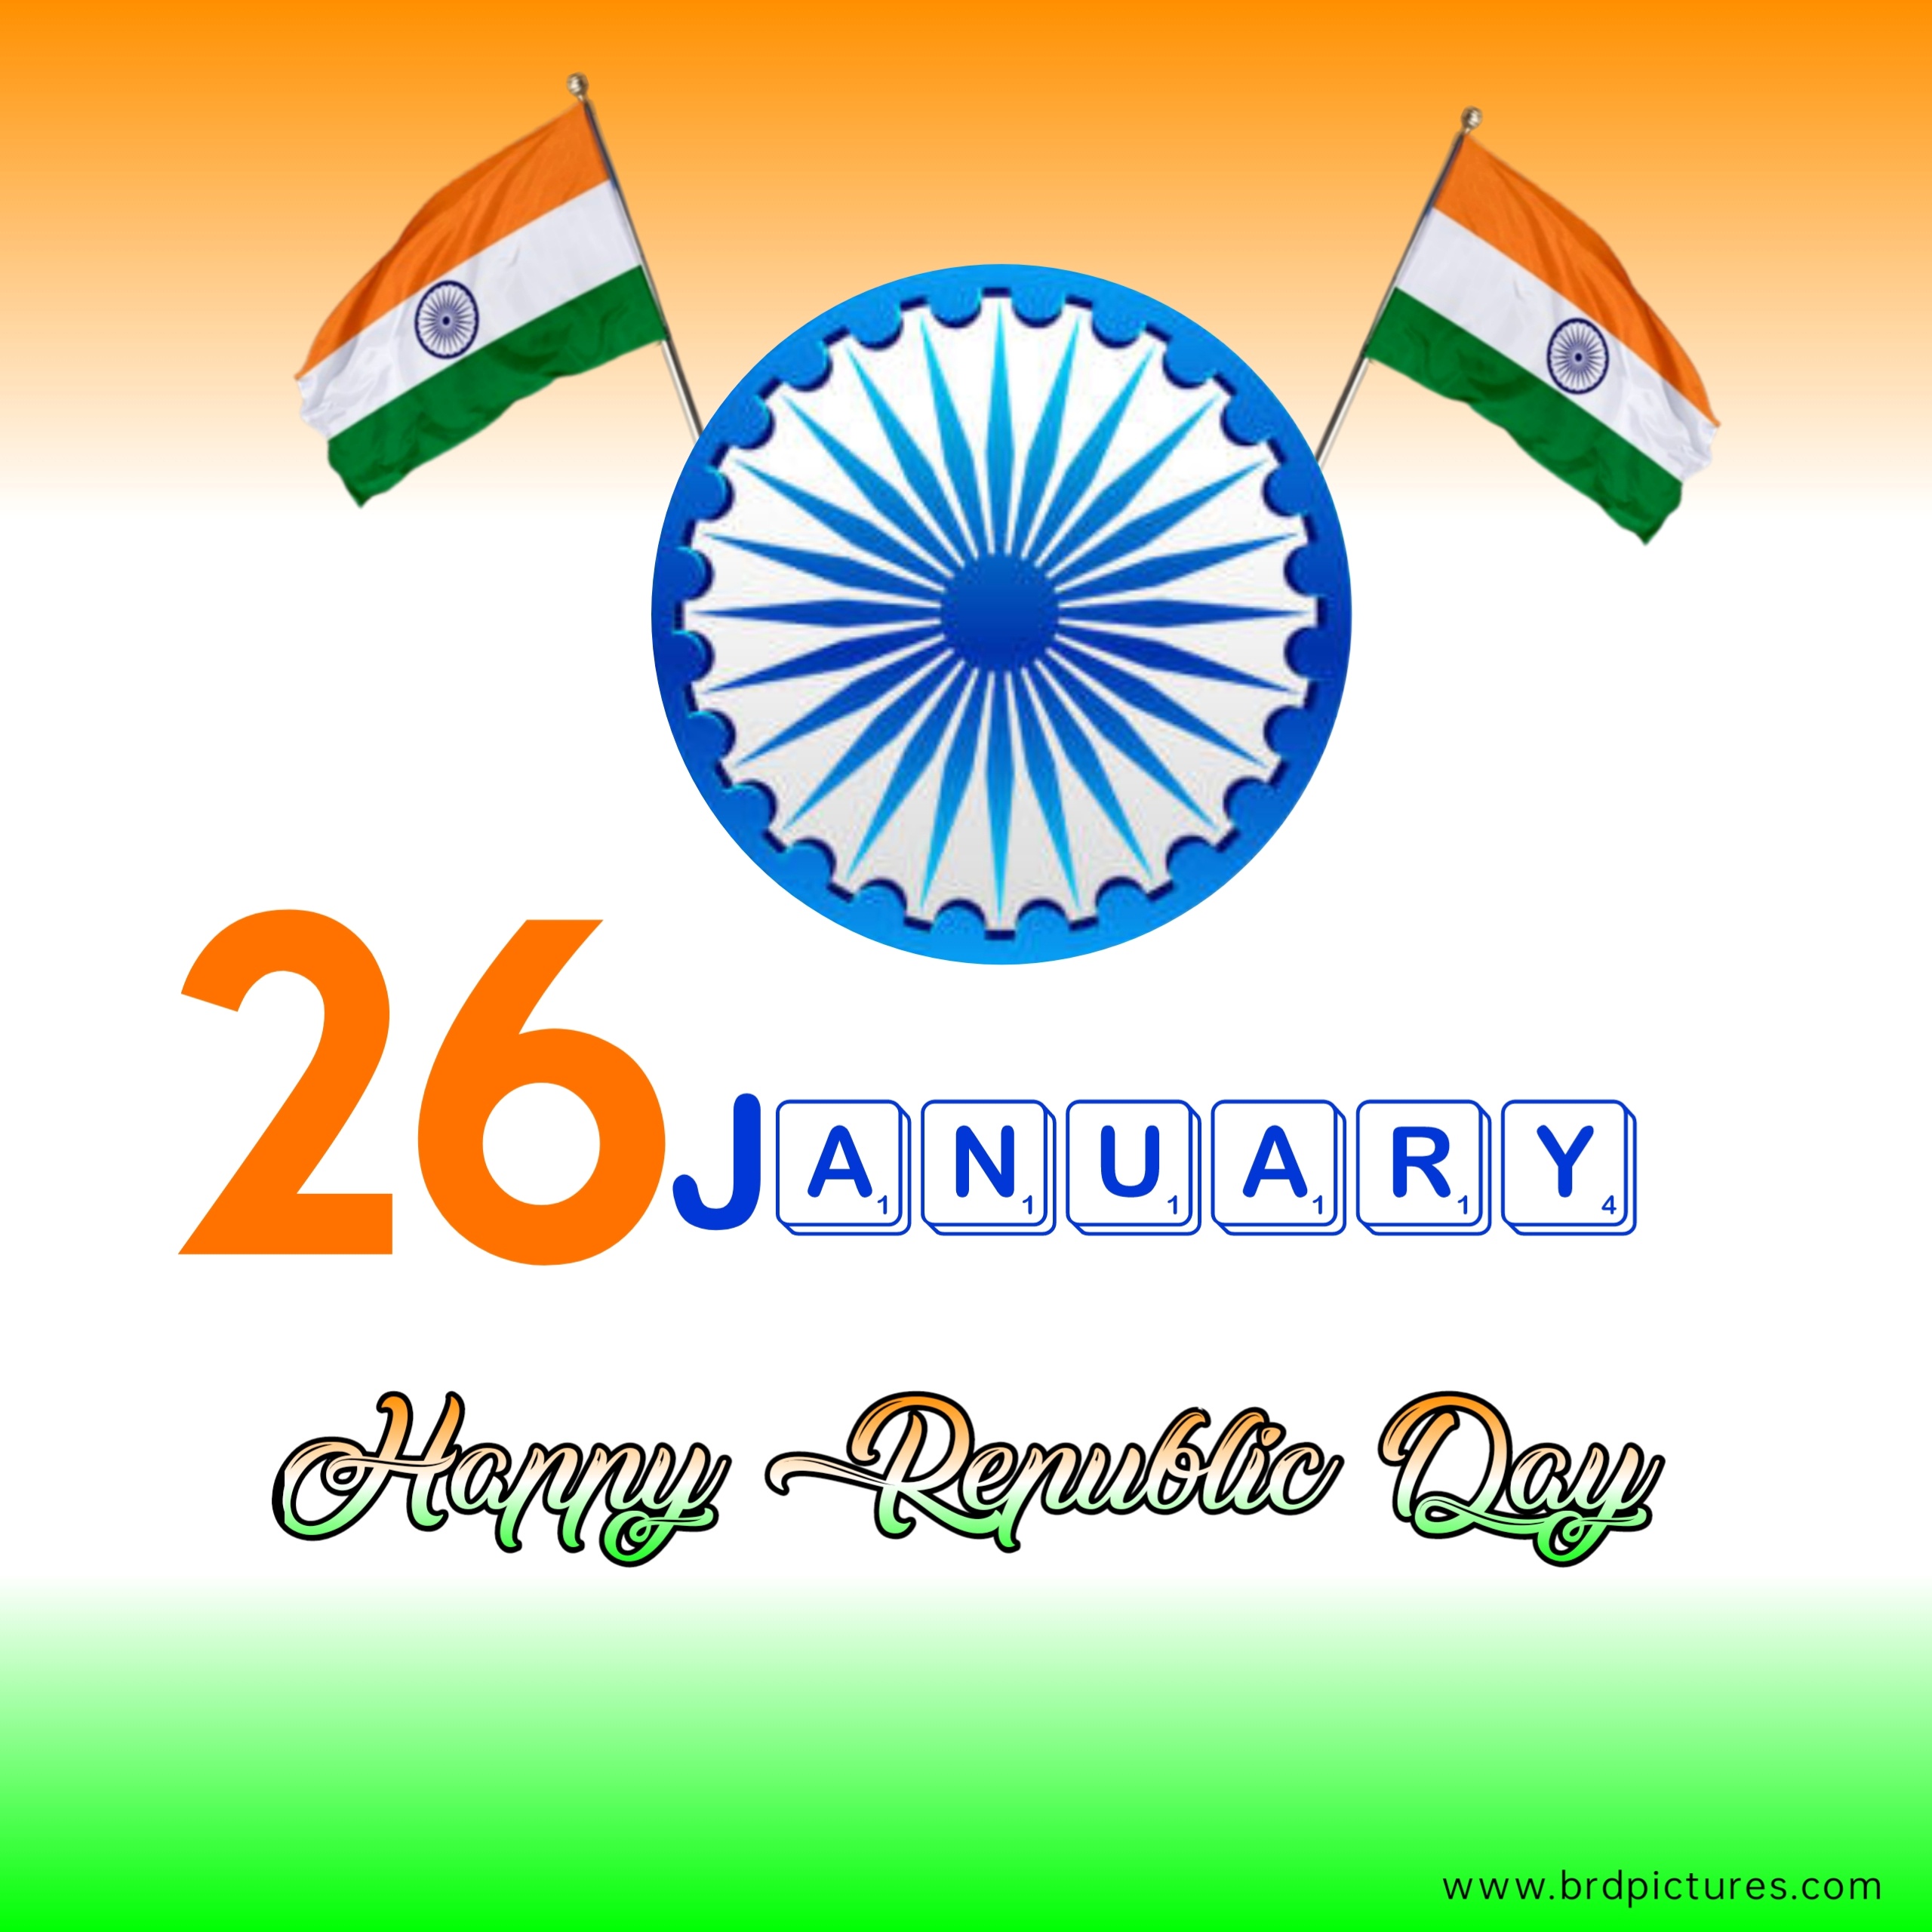 26 January Republic Day Image 